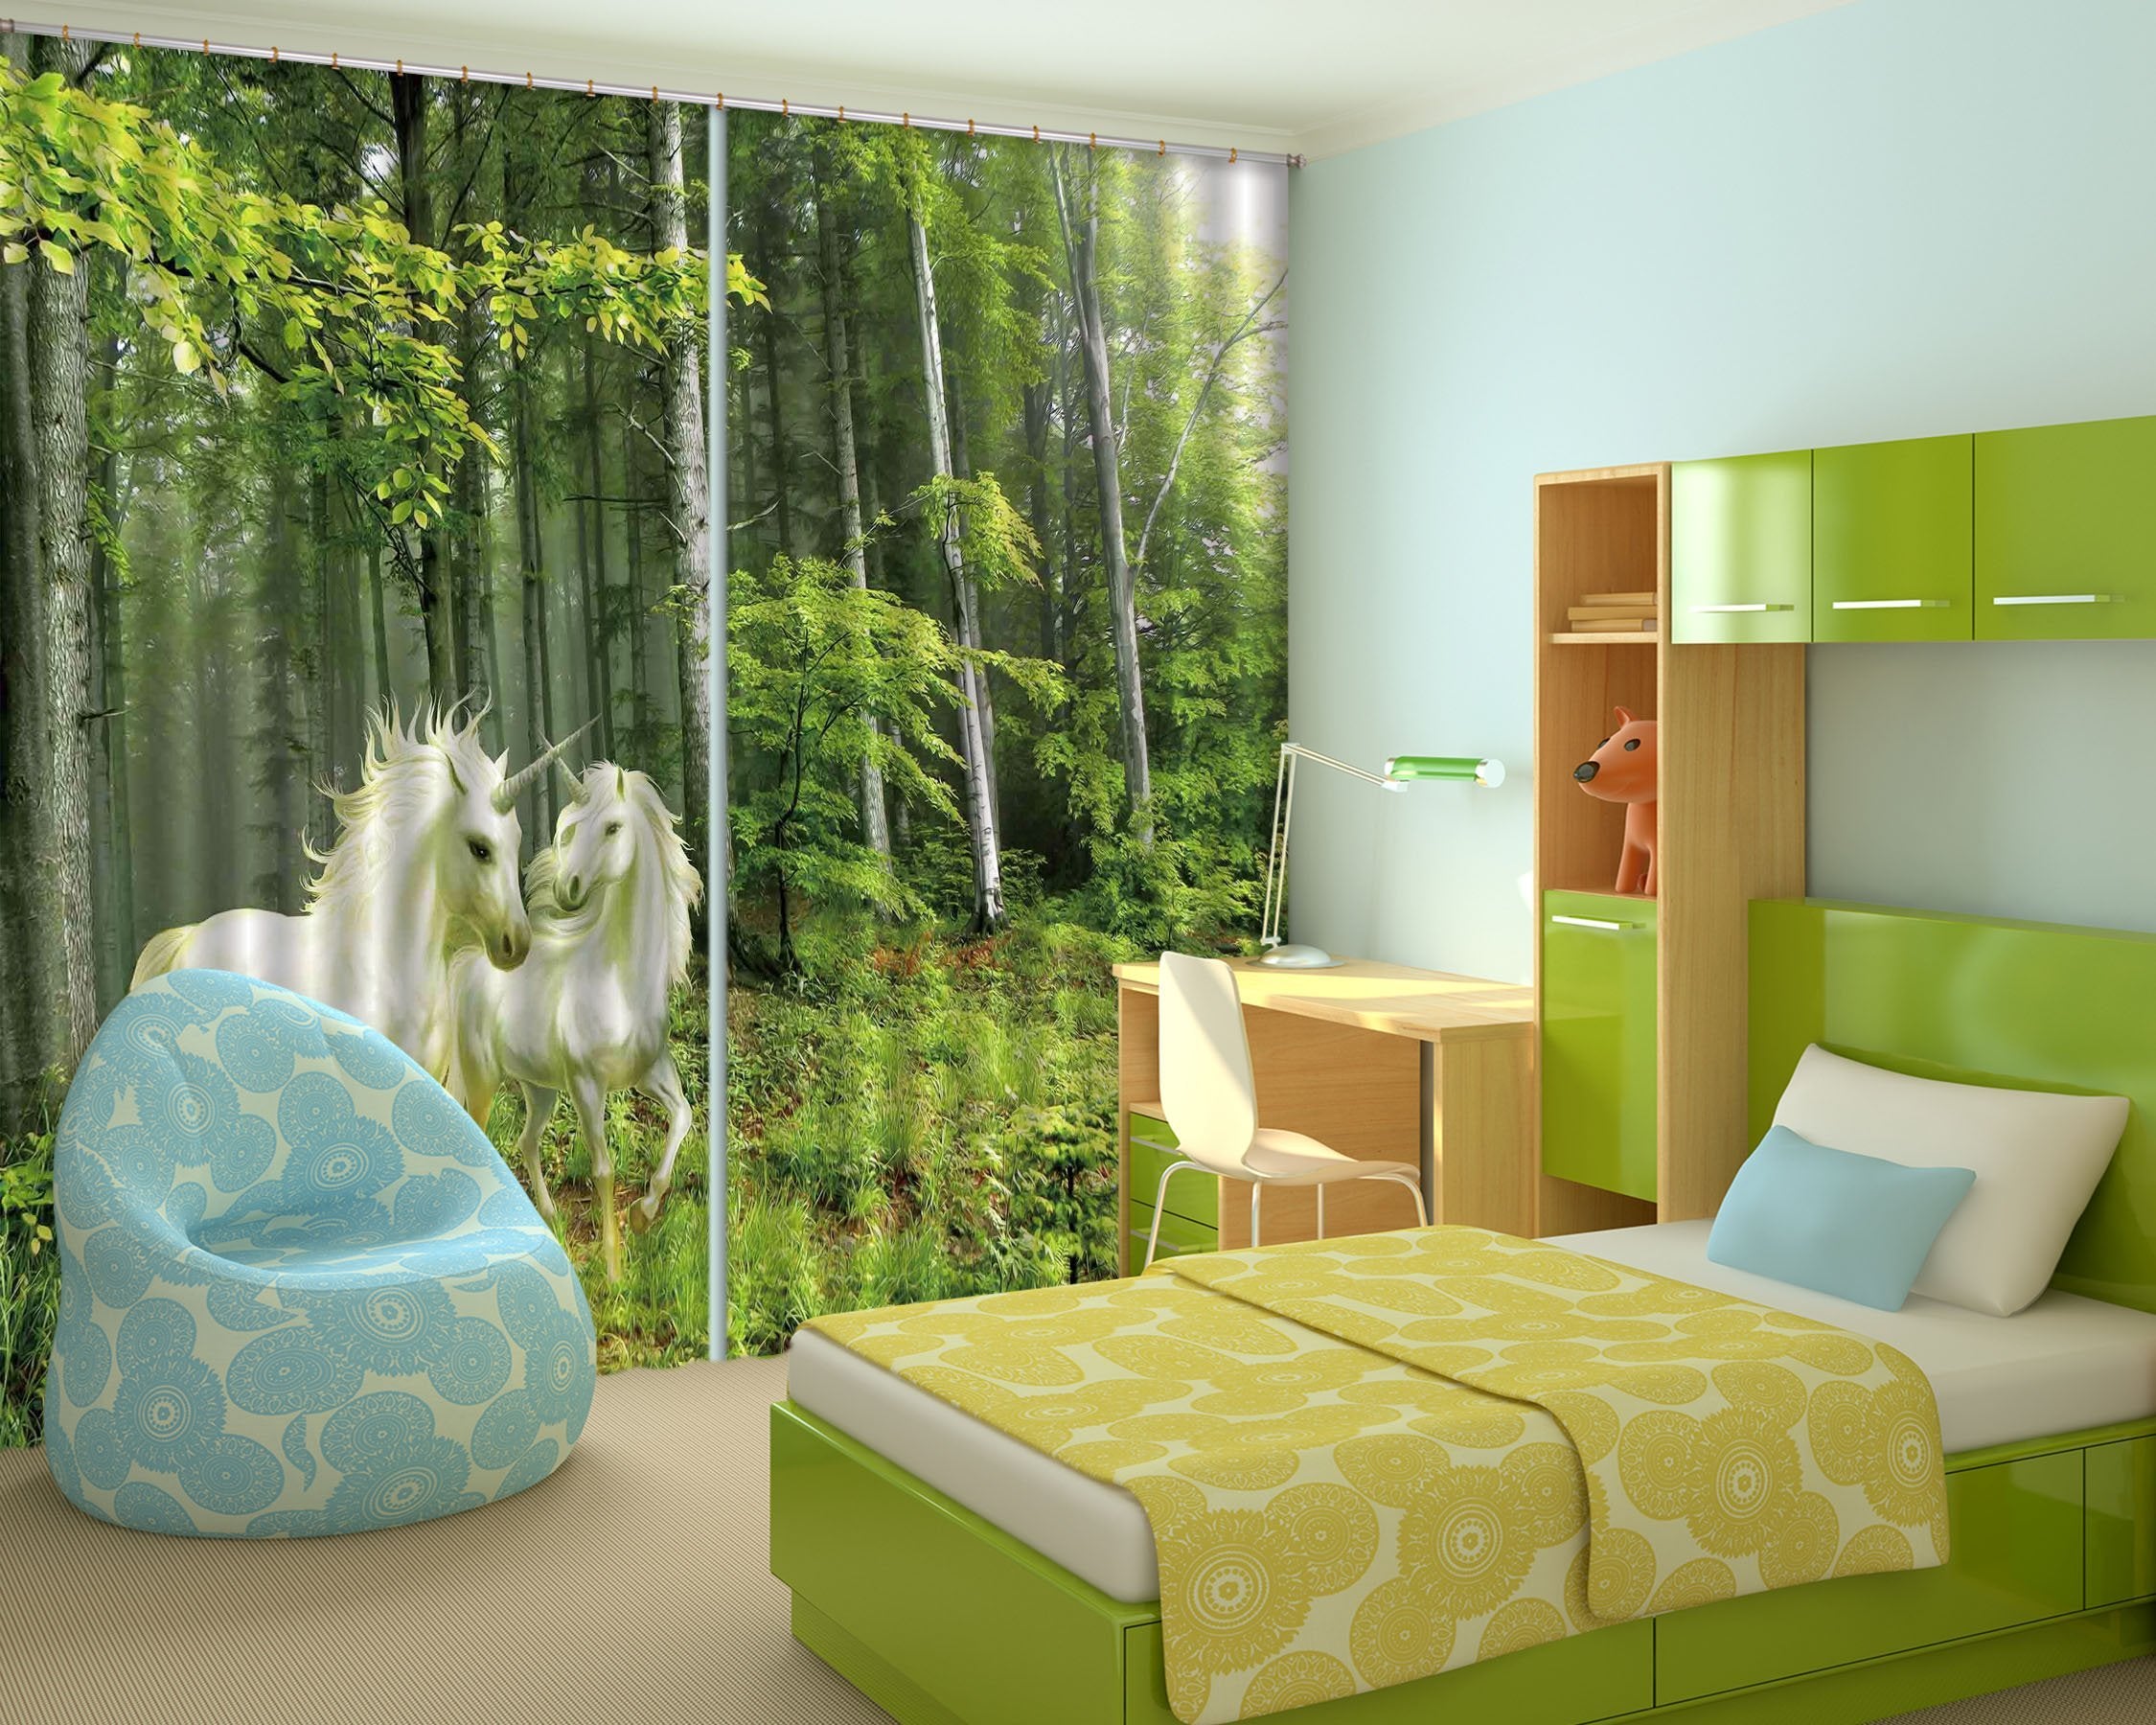 3D Forest Unicorns 2270 Curtains Drapes Wallpaper AJ Wallpaper 